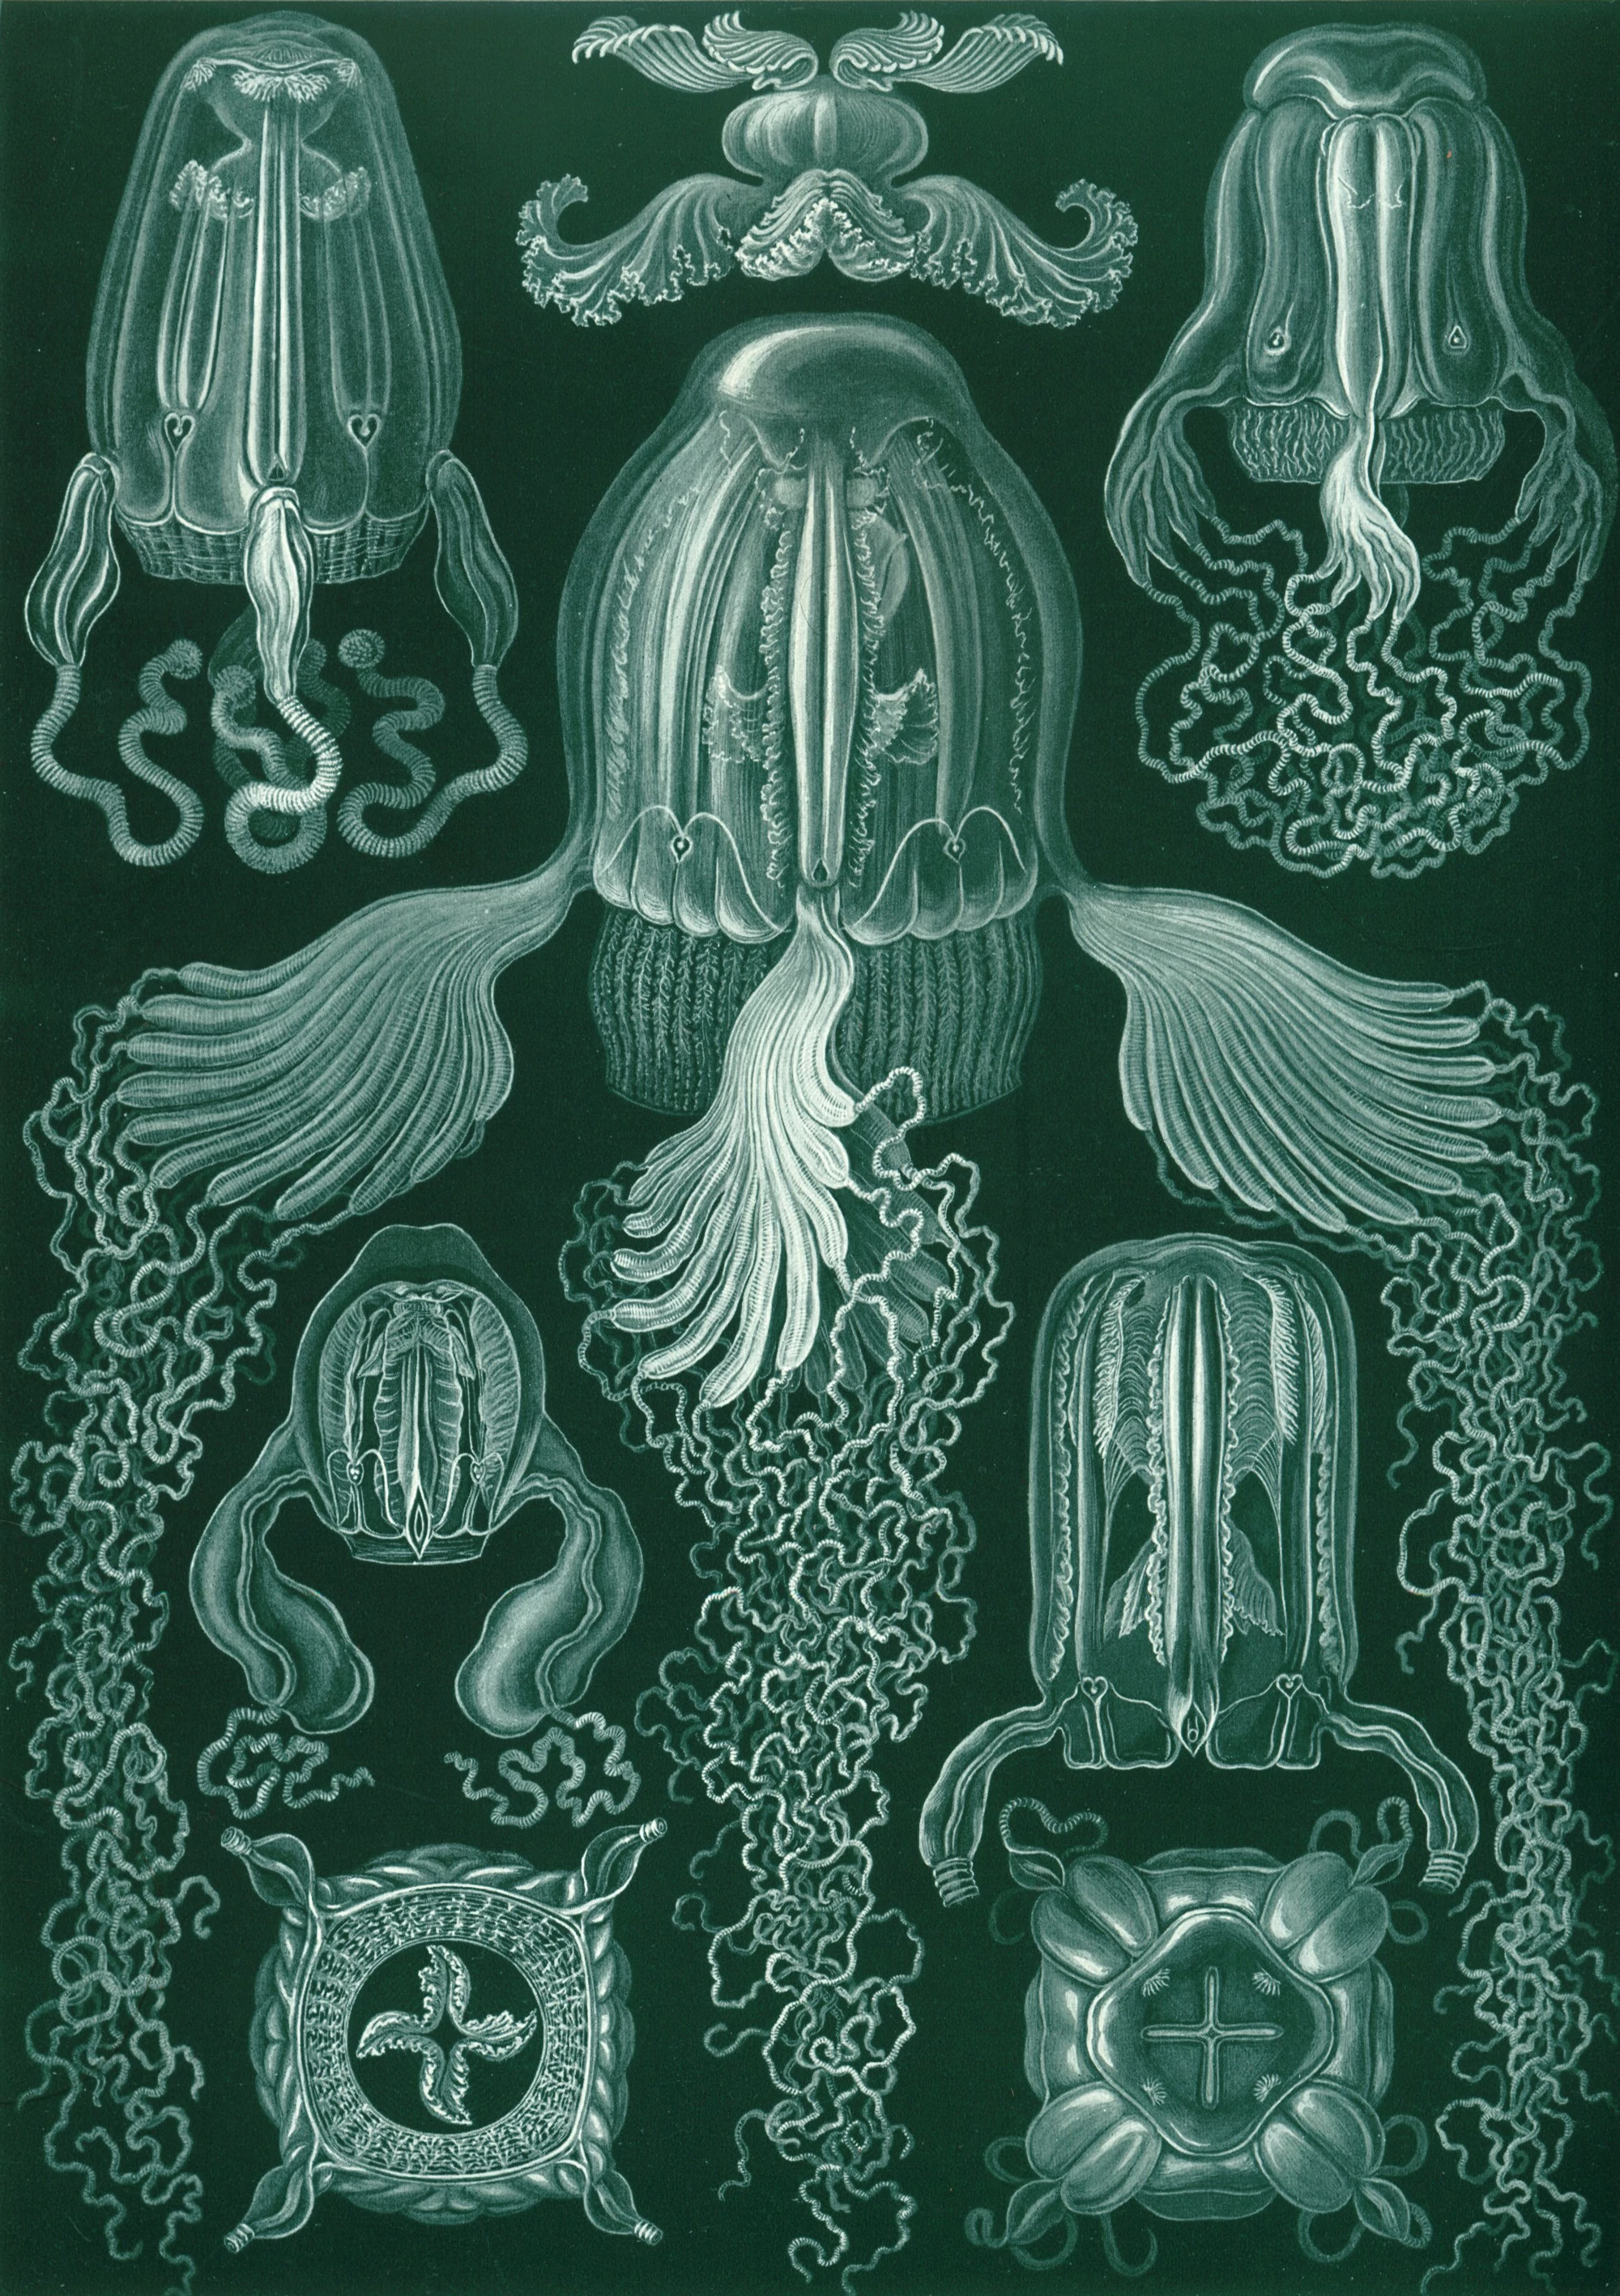 Art Forms in Nature, Plate 78: Cubomedusae, Ernst Haeckel